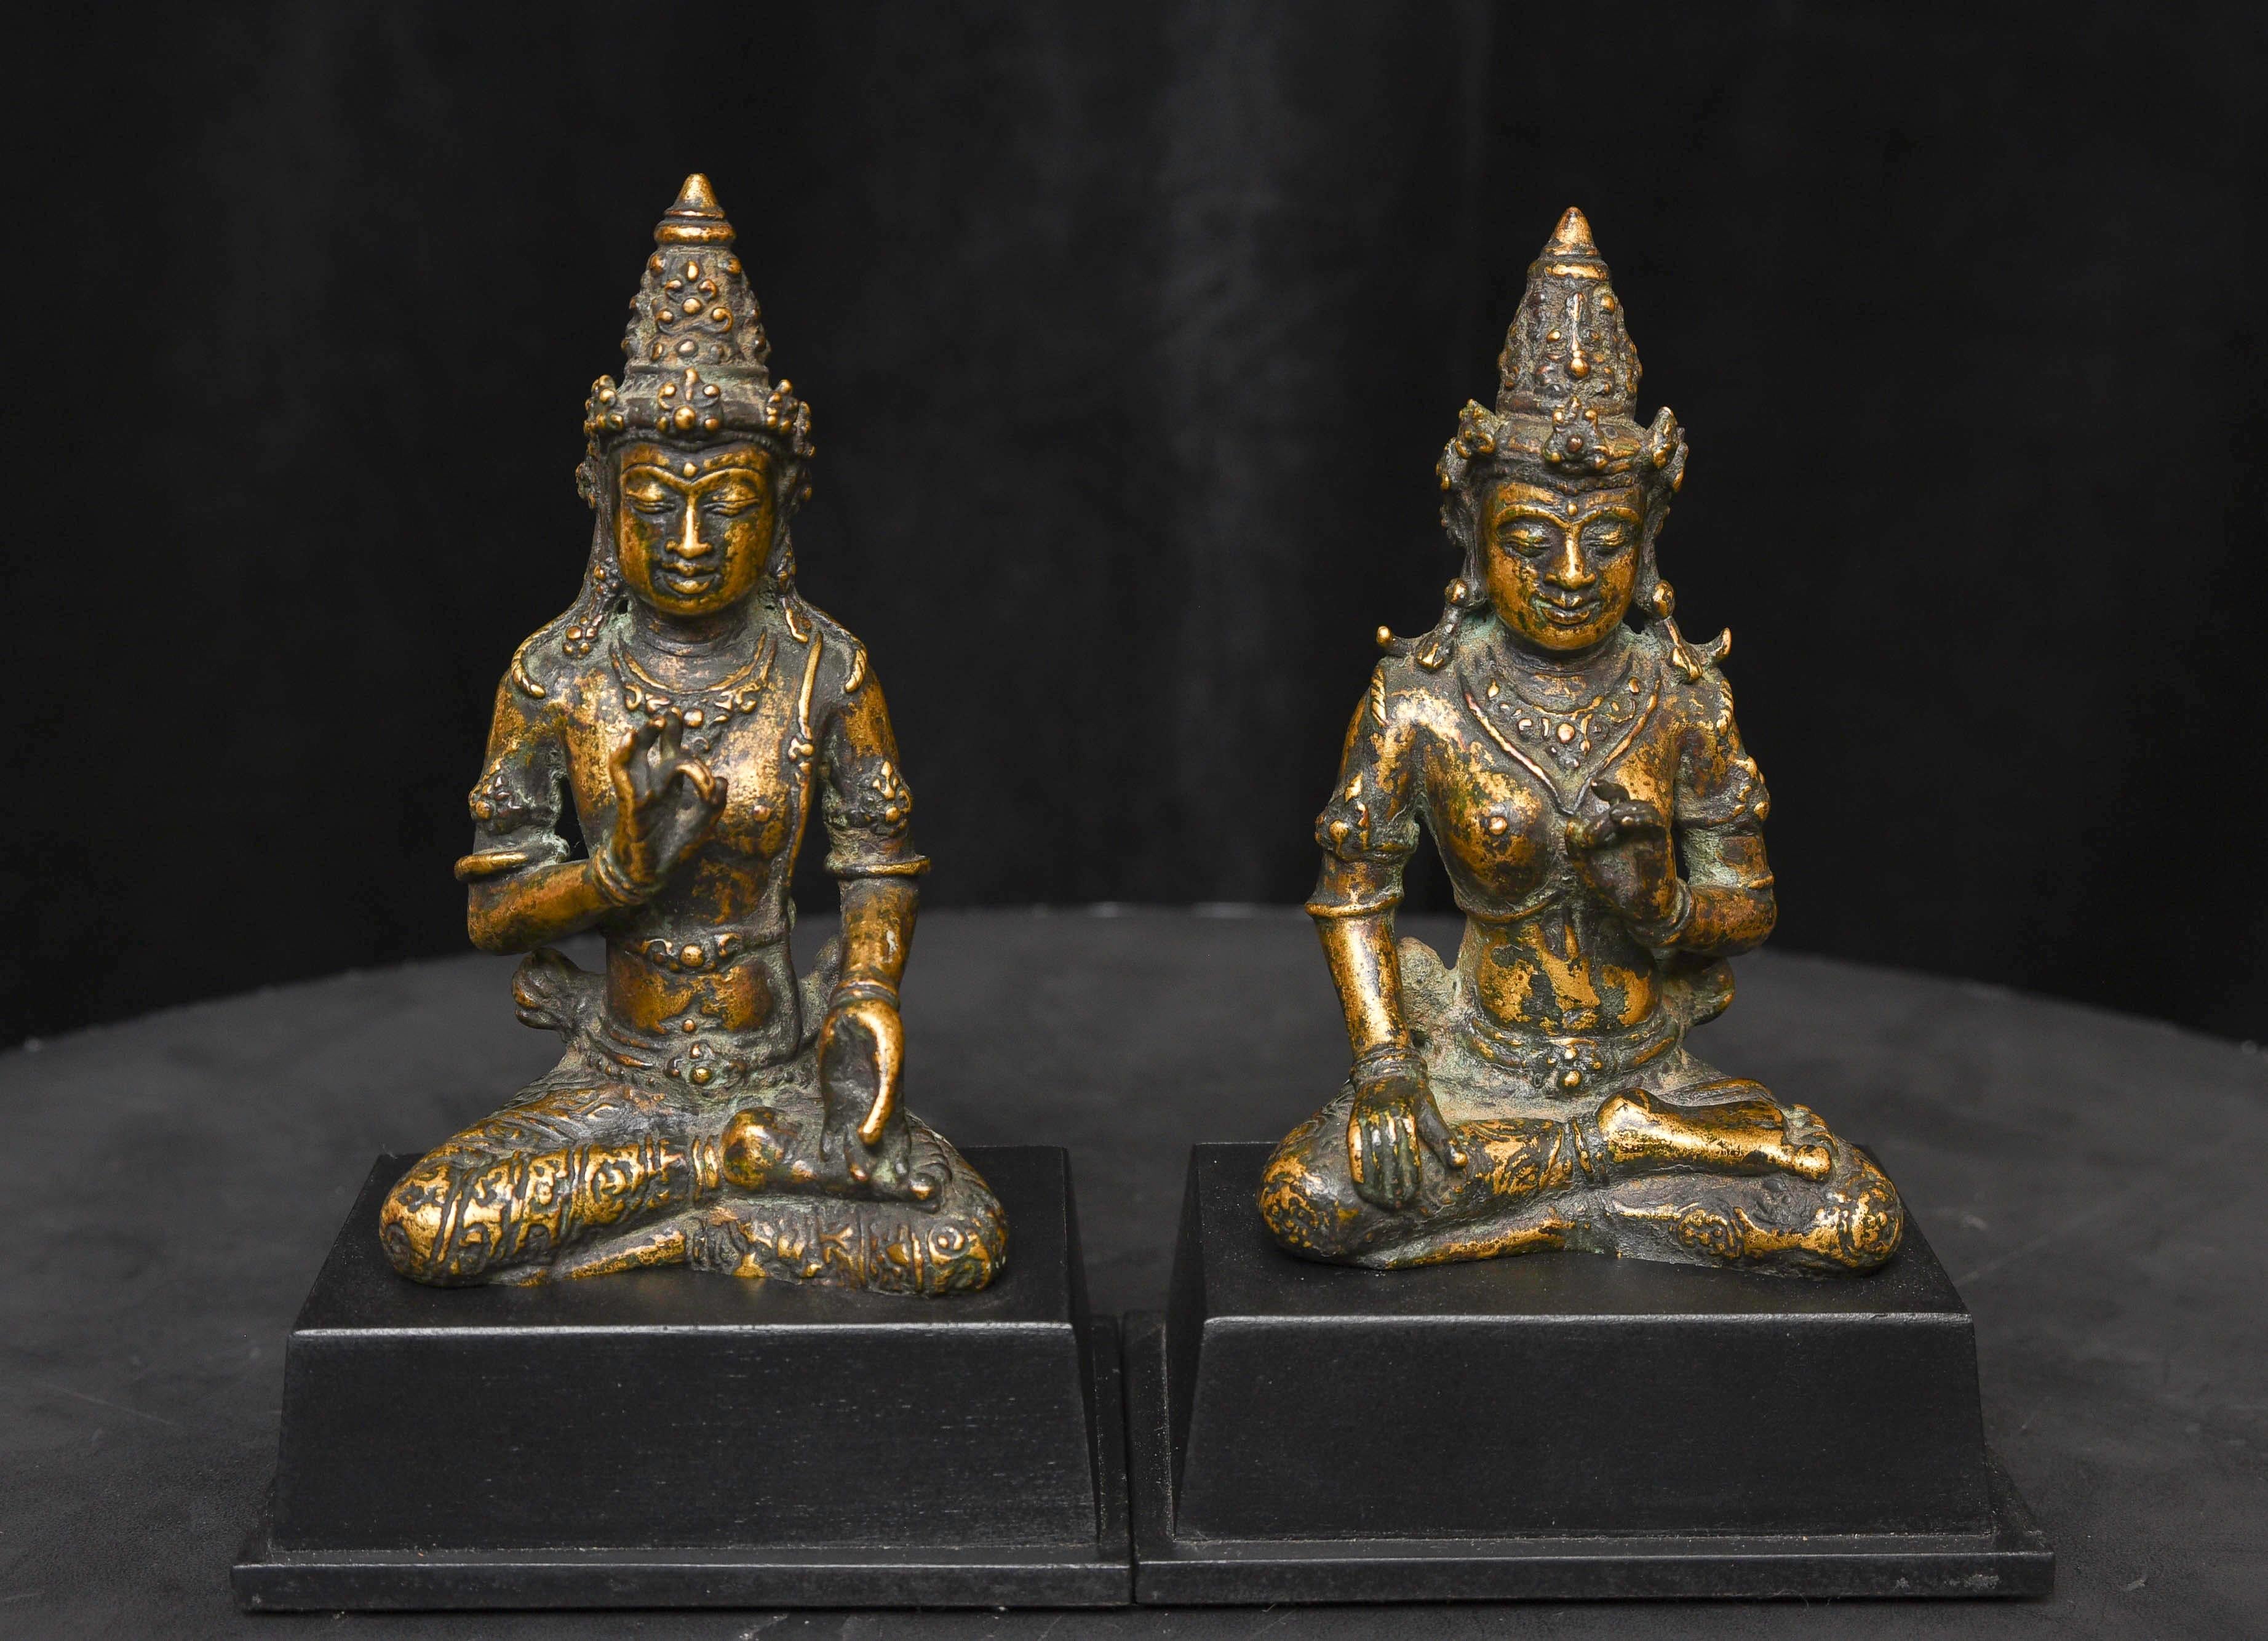 15-19thC Indonesian or Javanese Gilt Bronze Deities - 9591 For Sale 6